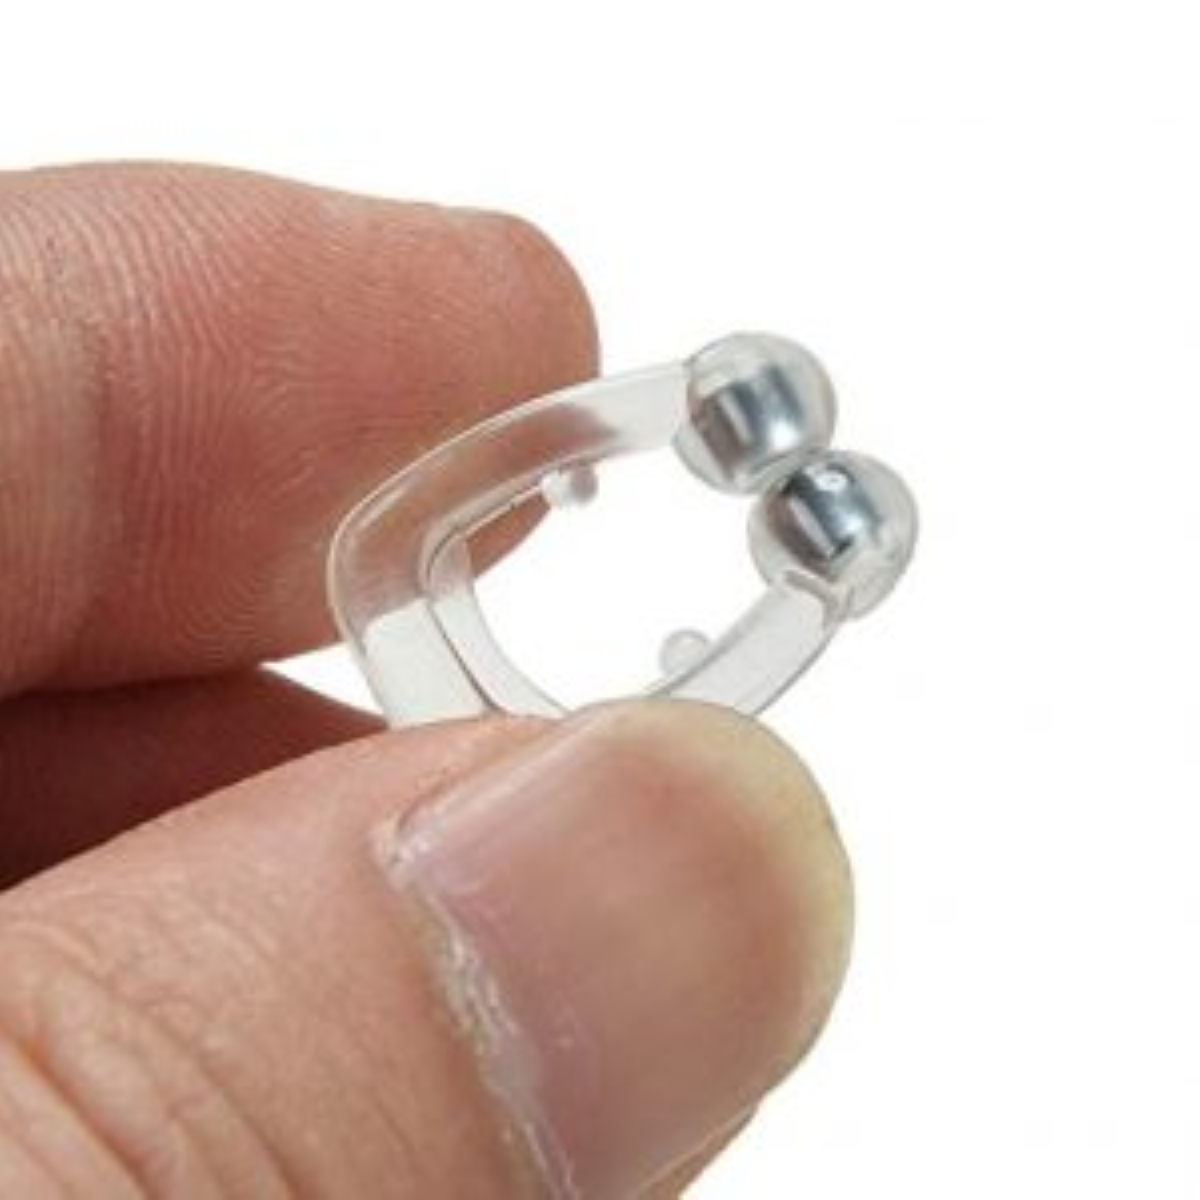 Clipple Anti Snoring Nose Clip - Small, Lightweight Design